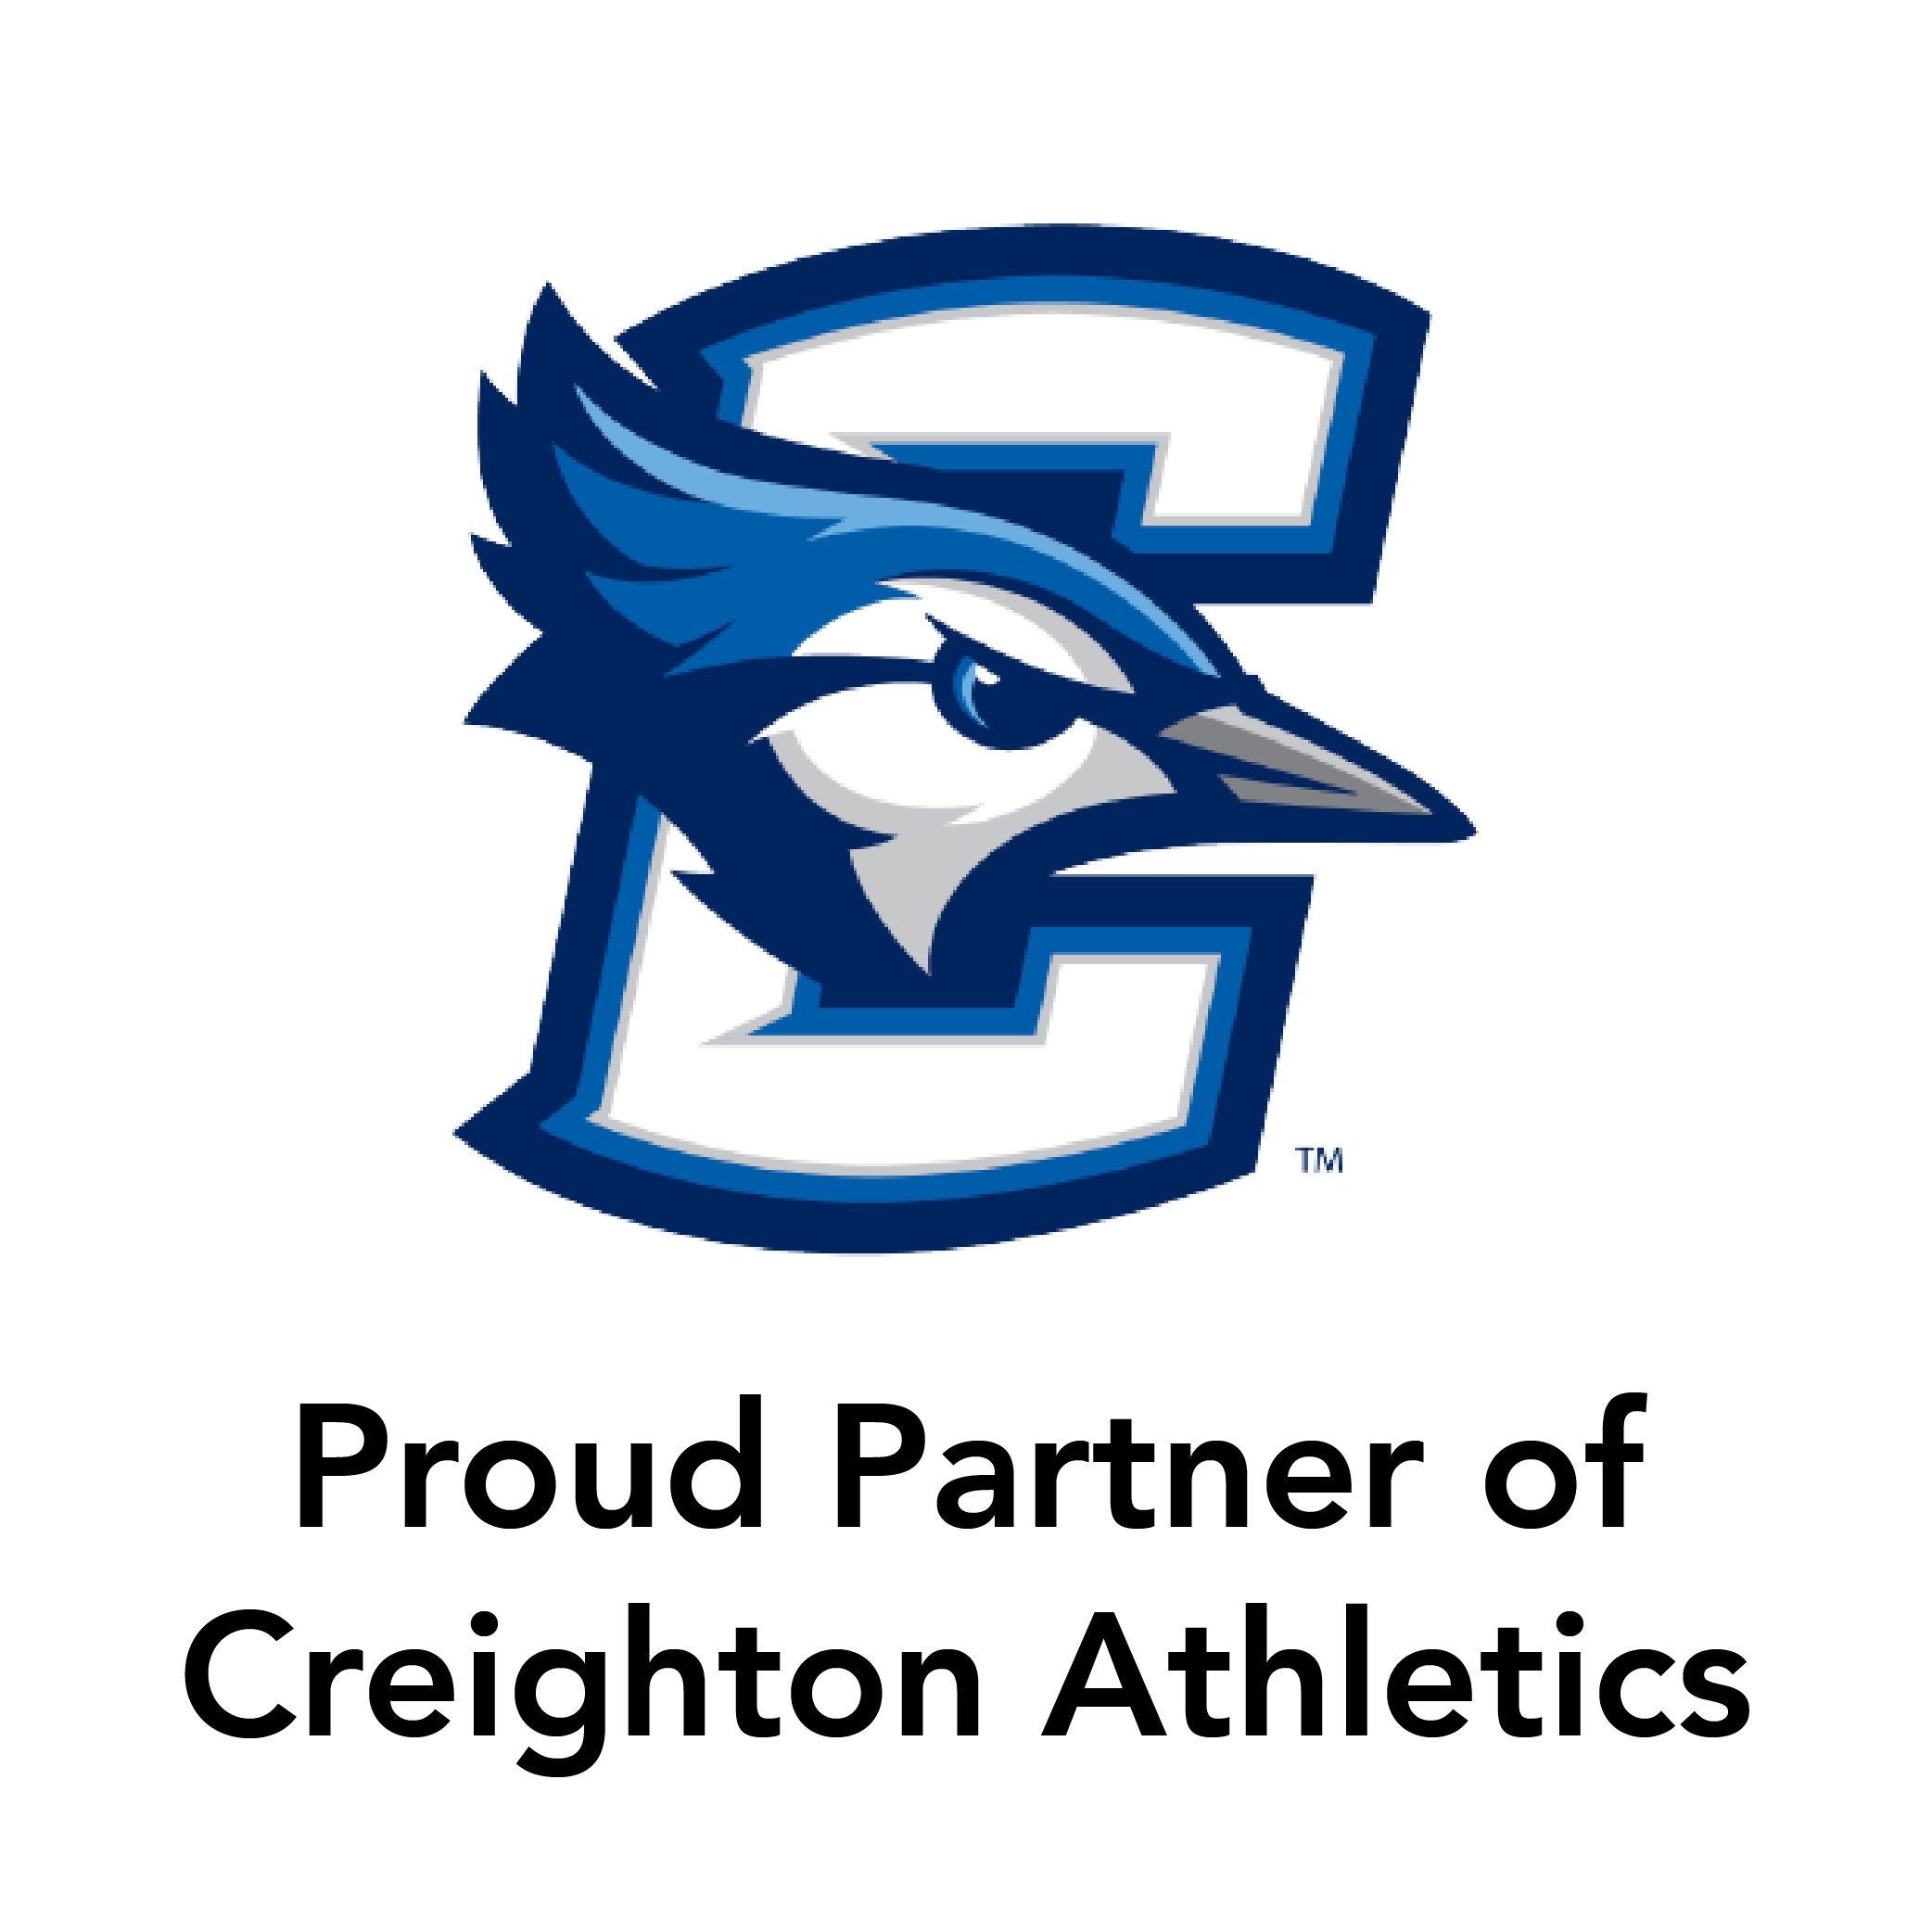 Creighton University logo followed by the text "Proud Sponsor of Creighton Athletics"